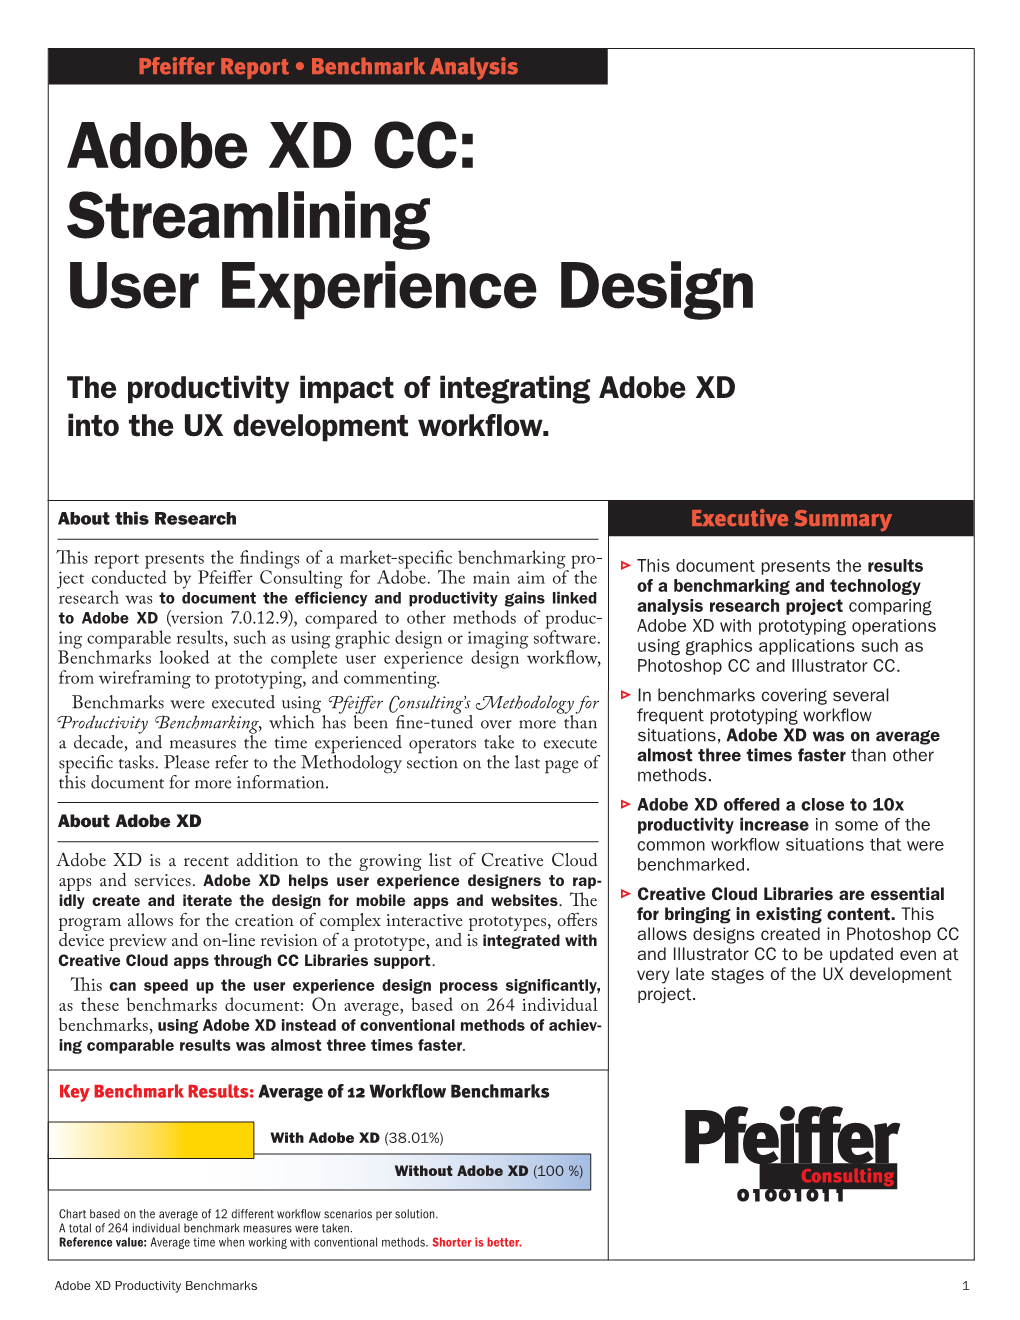 Adobe XD CC: Streamlining User Experience Design